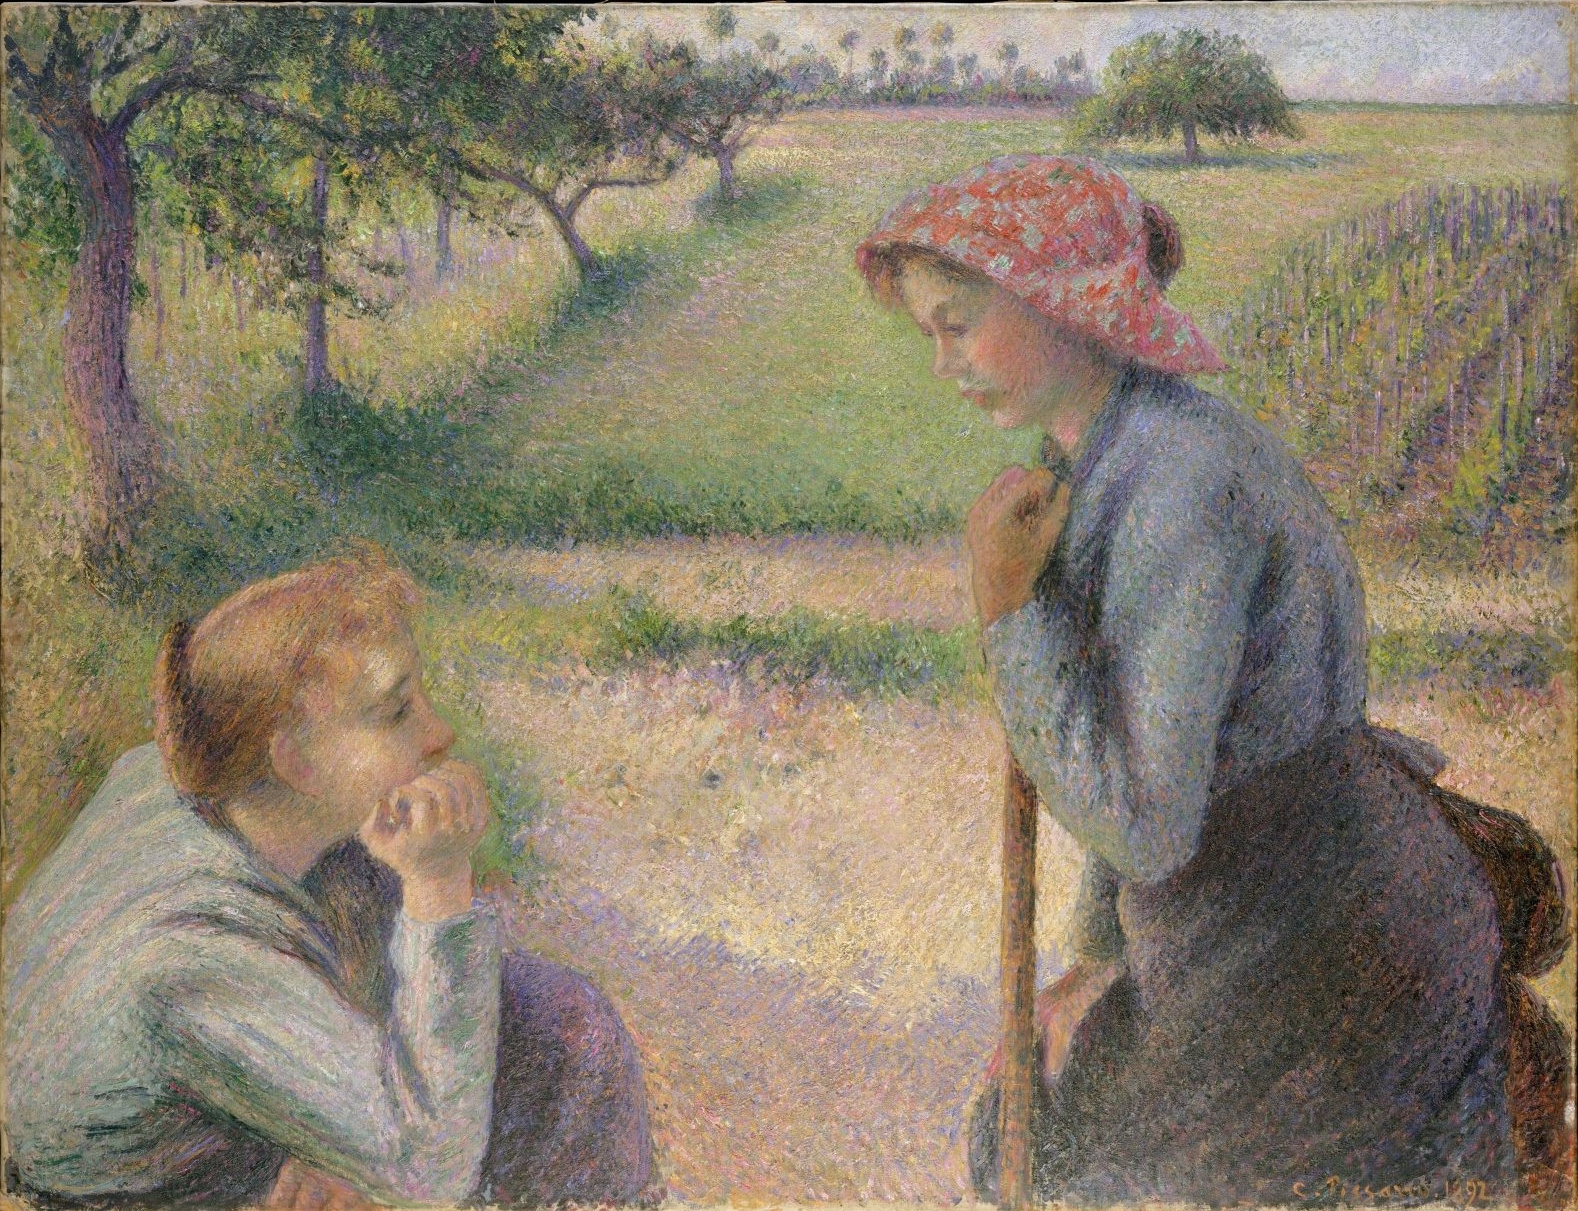 Camille+Pissarro-1830-1903 (368).jpg